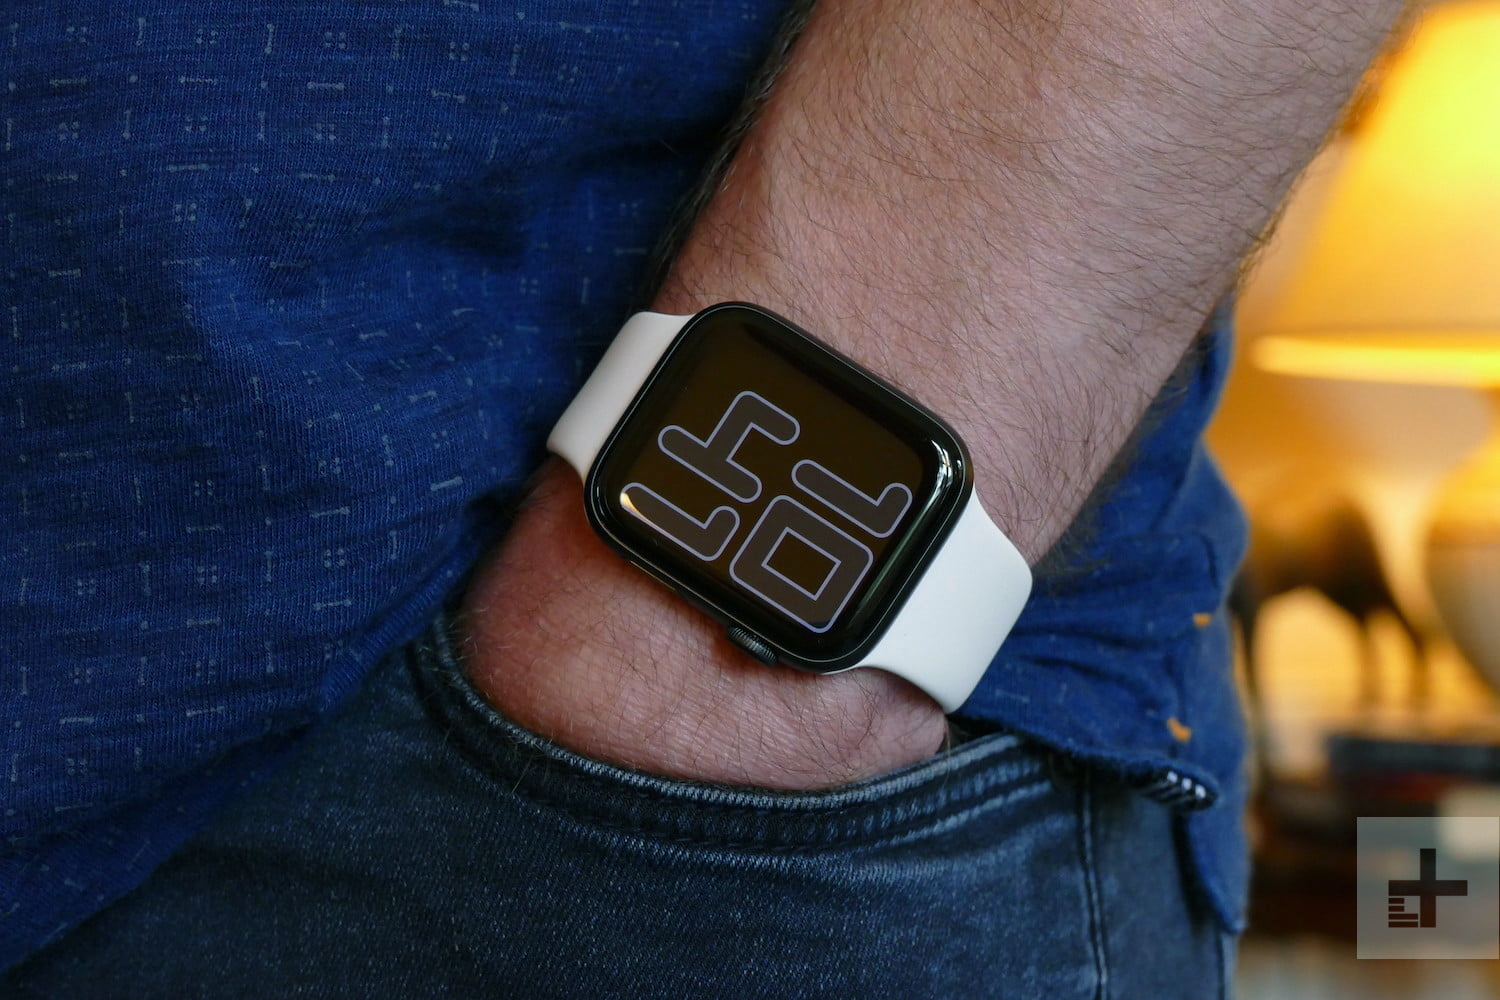 Apple Watch Series 5 Review: The Best Smartwatch Is Now A Better Watch -  Tech